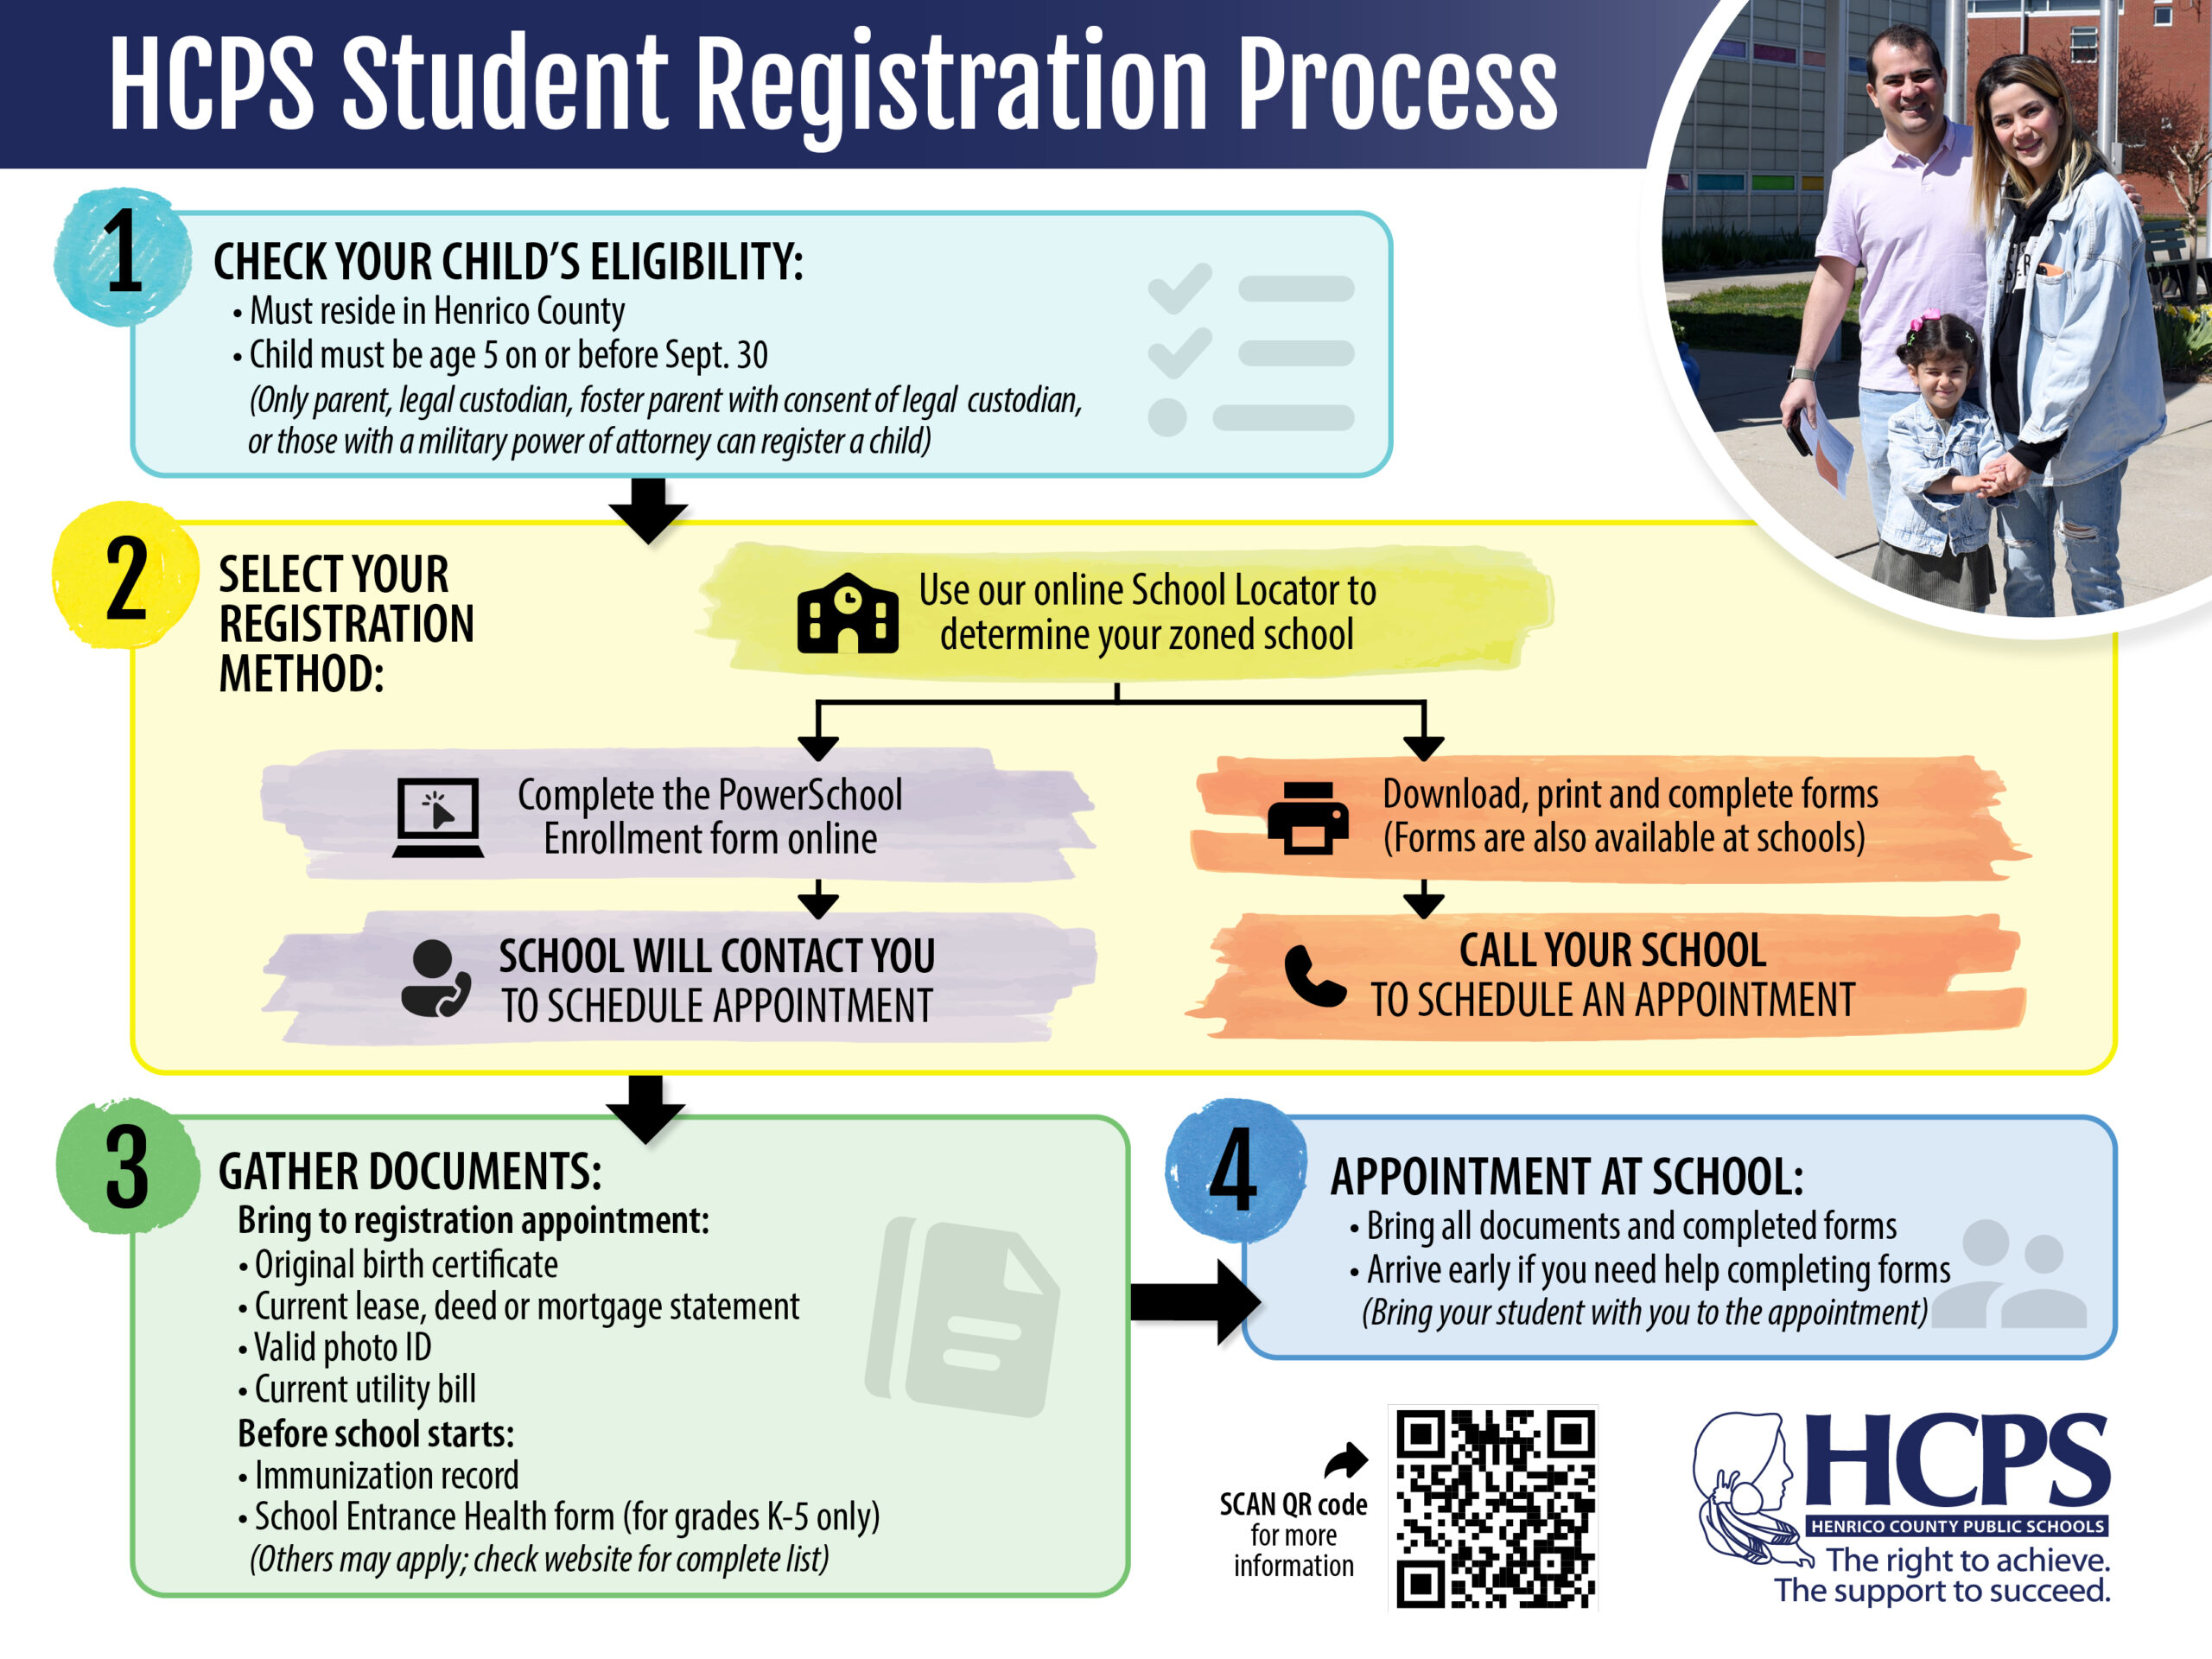 HCPS Student Registration Workflow